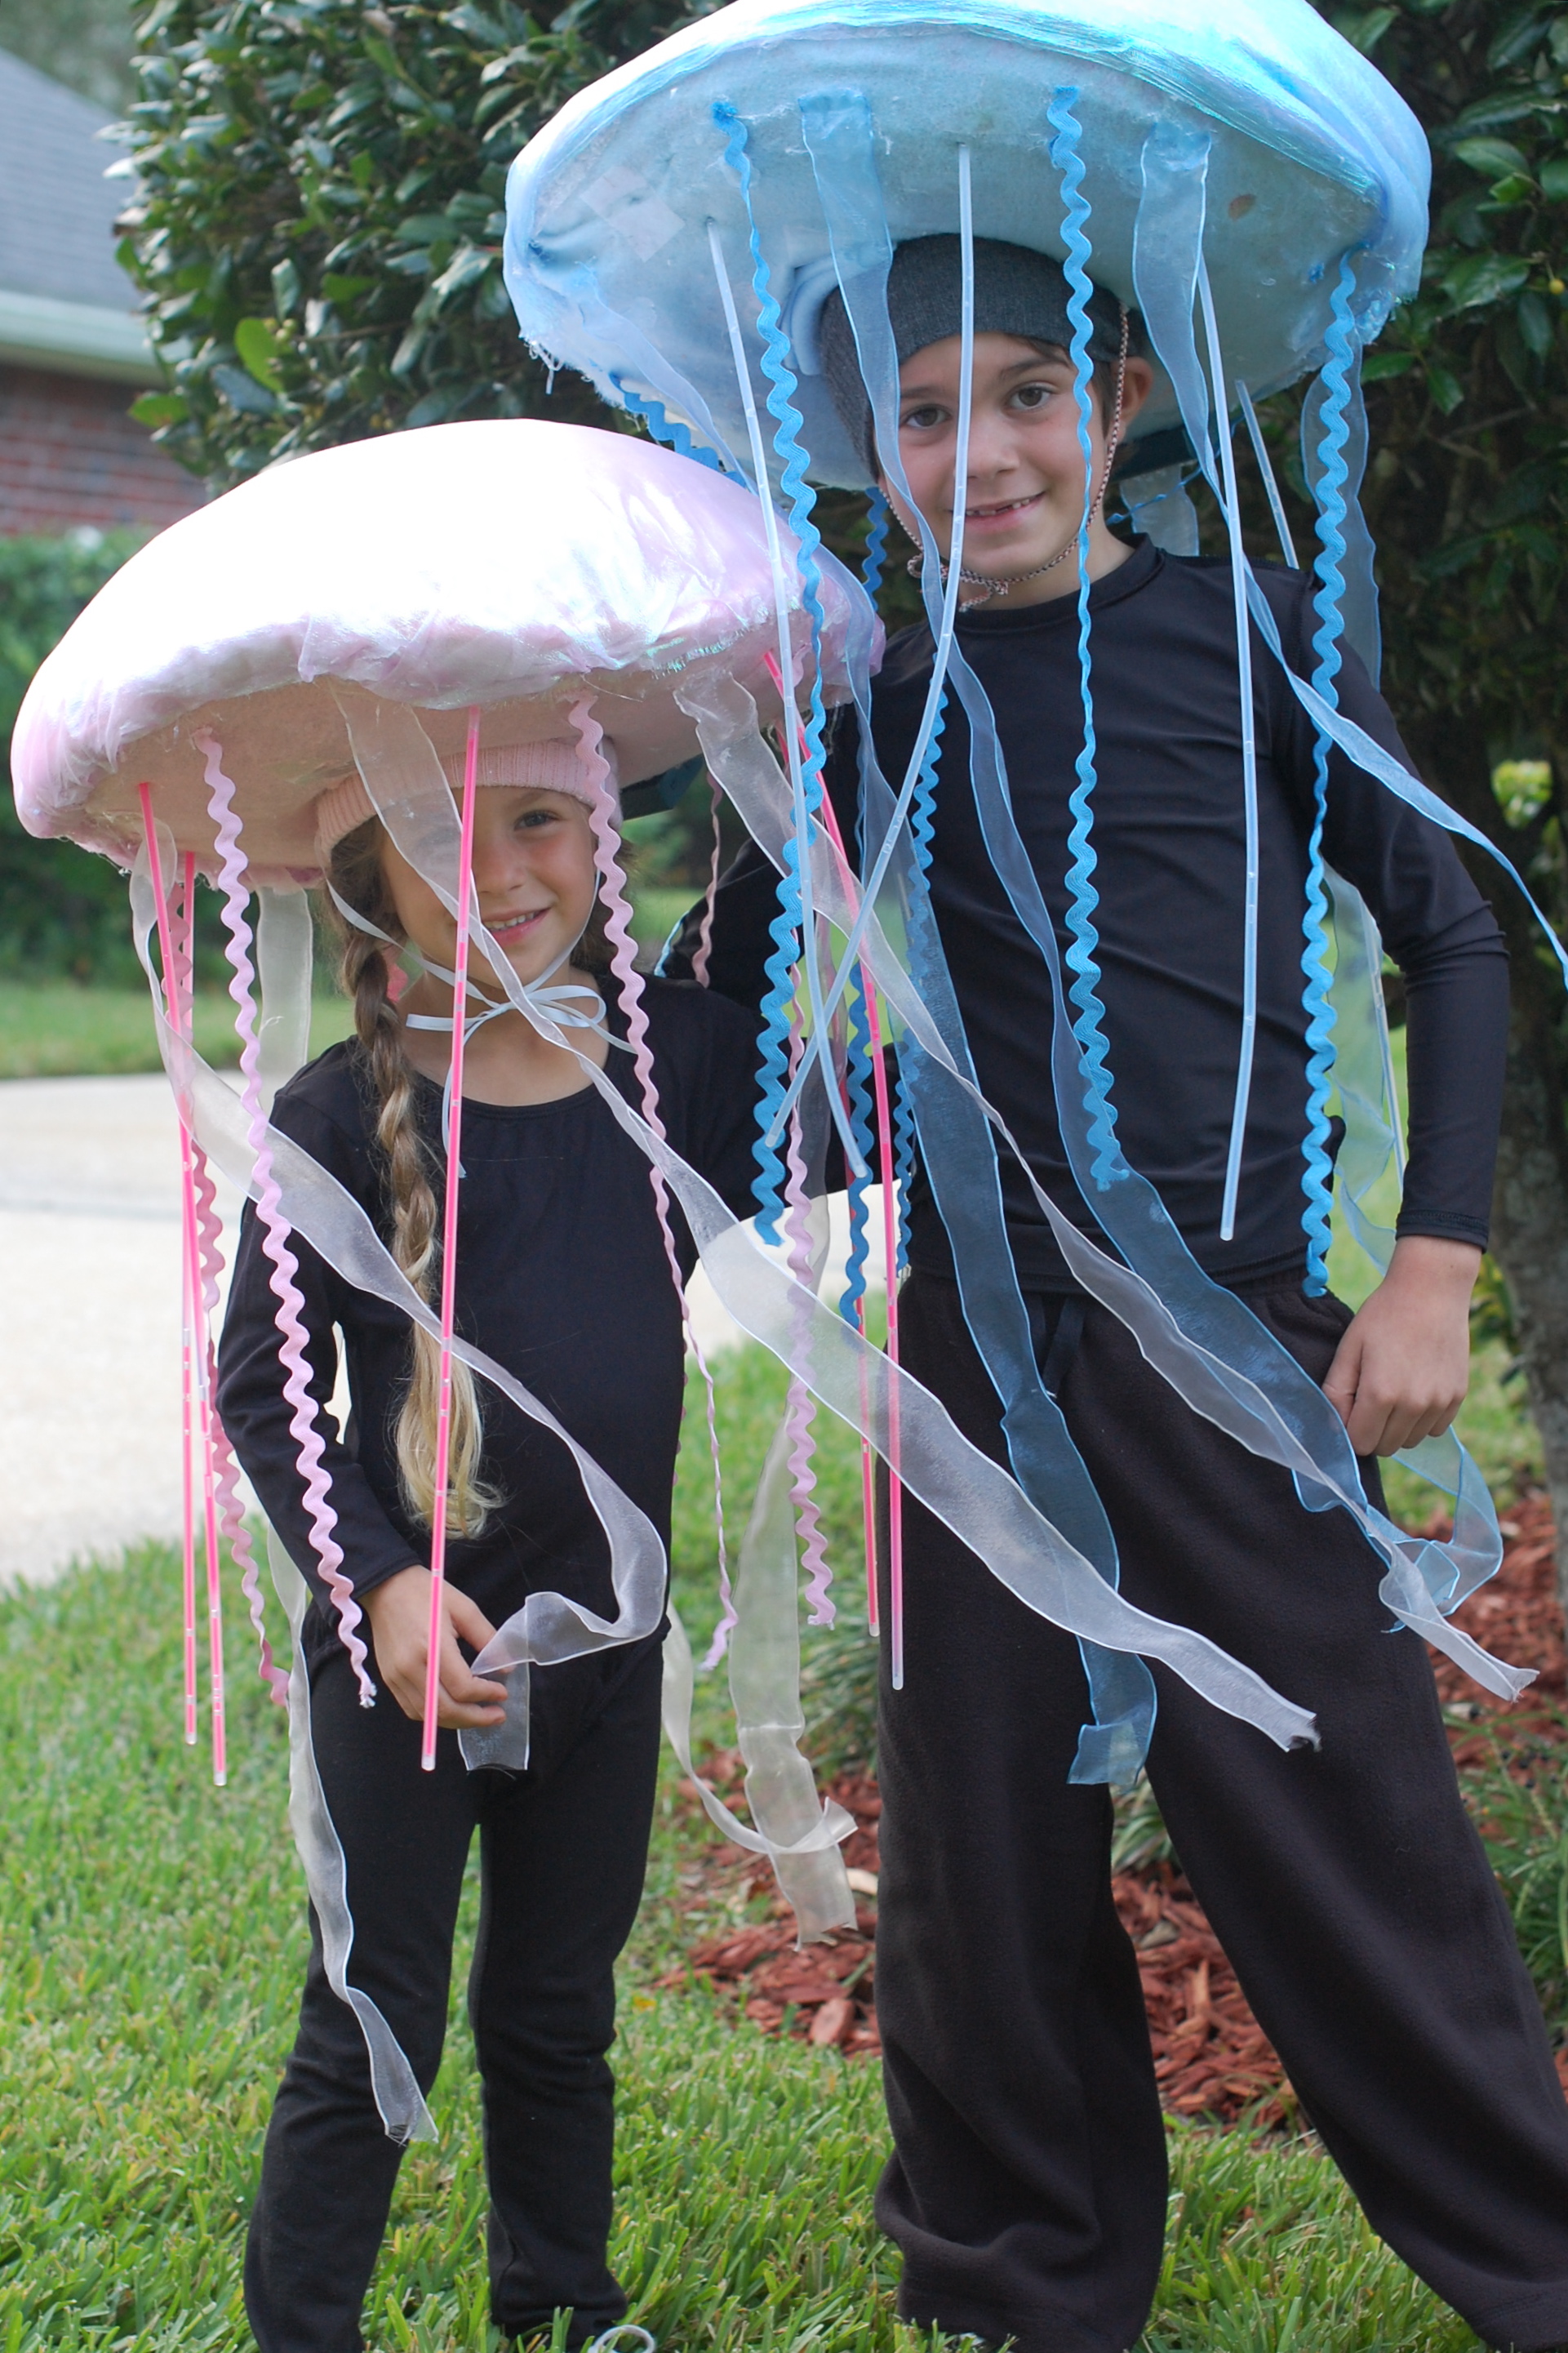 Glow in the dark diy jellyfish costume tutorial - Swoodson Says